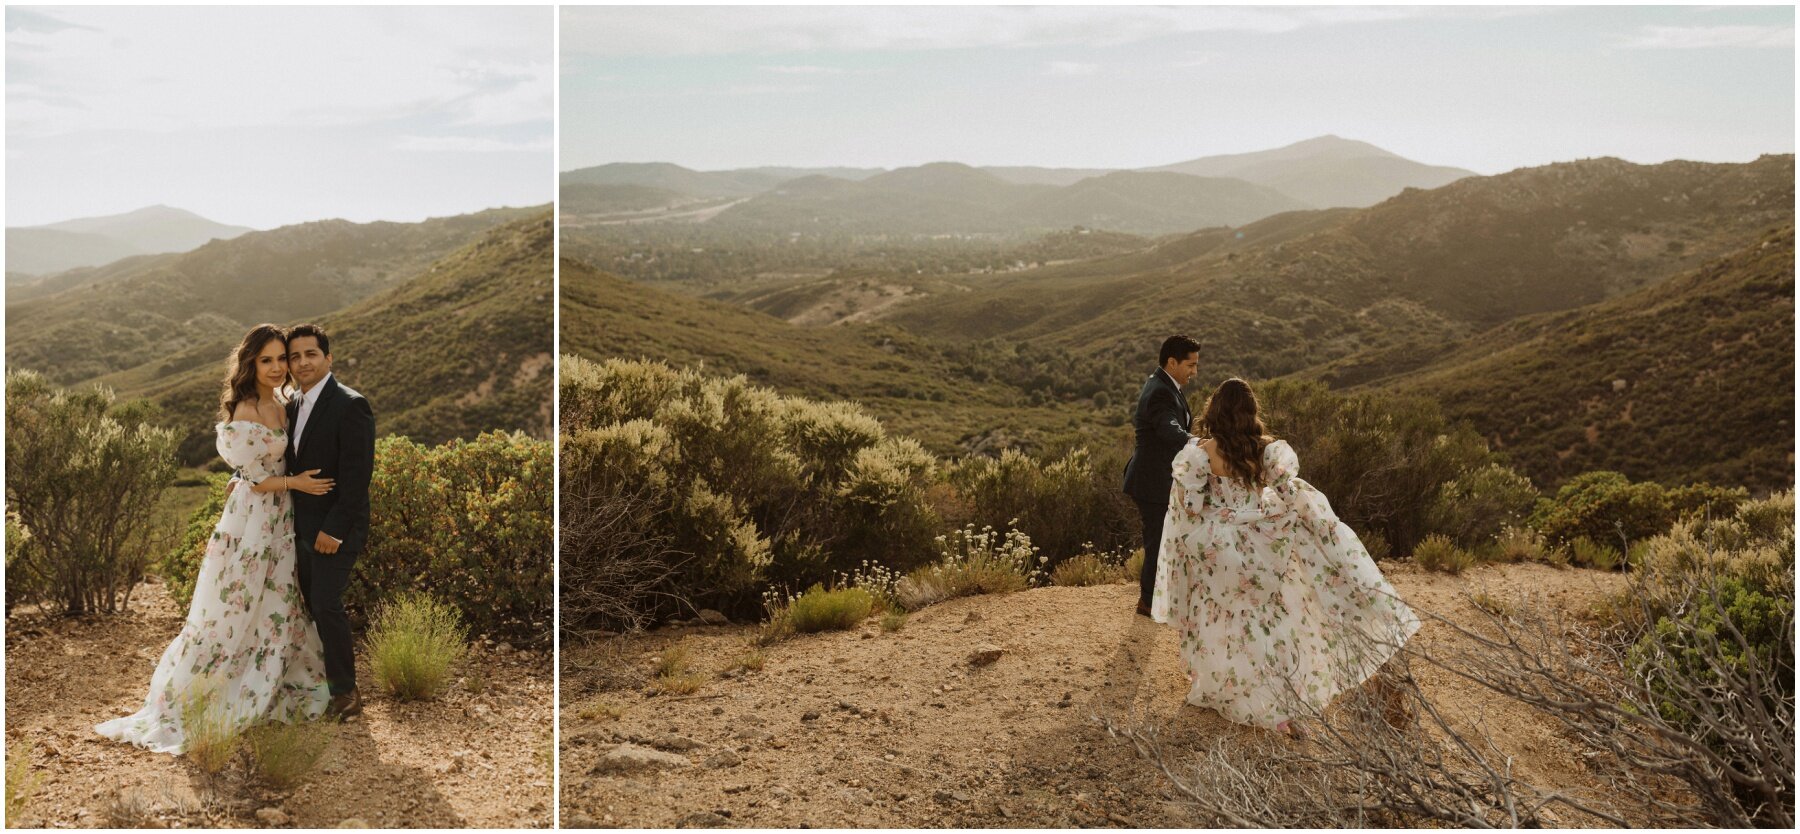 desert engagement session in california - erika greene photography - couples photographer_0003.jpg